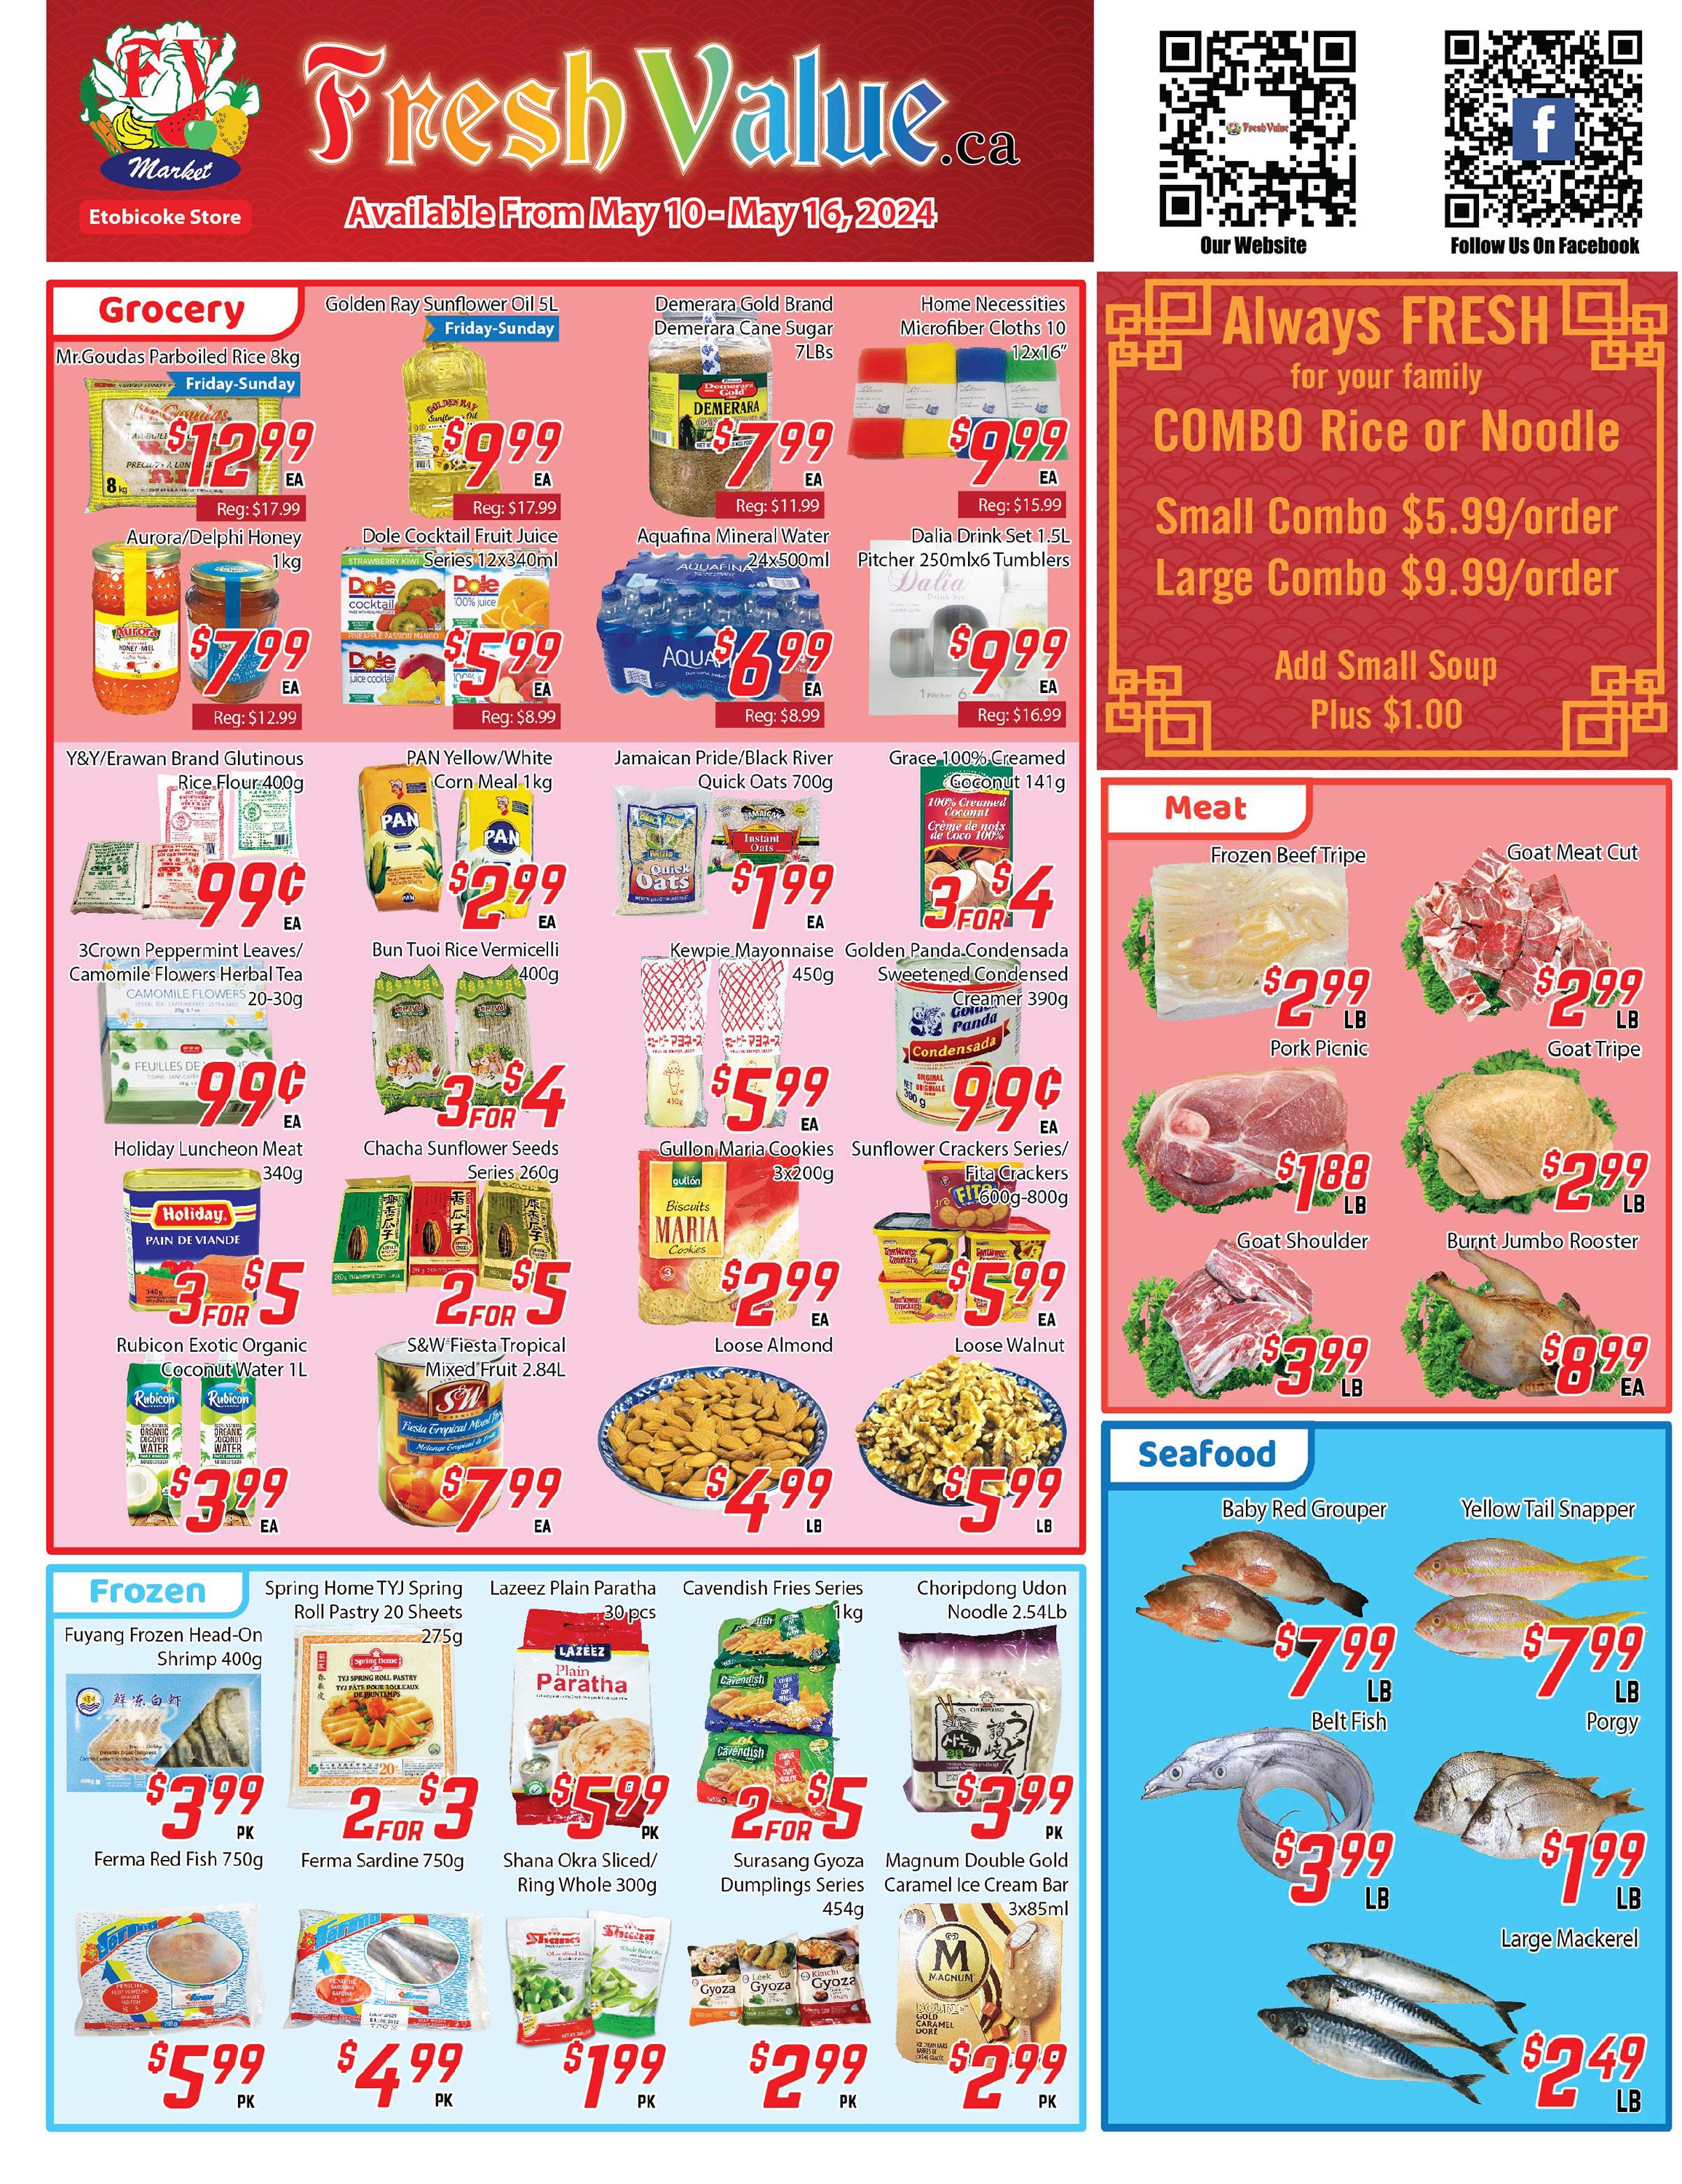 Fresh Value Market - Etobicoke Store - Weekly Flyer Specials